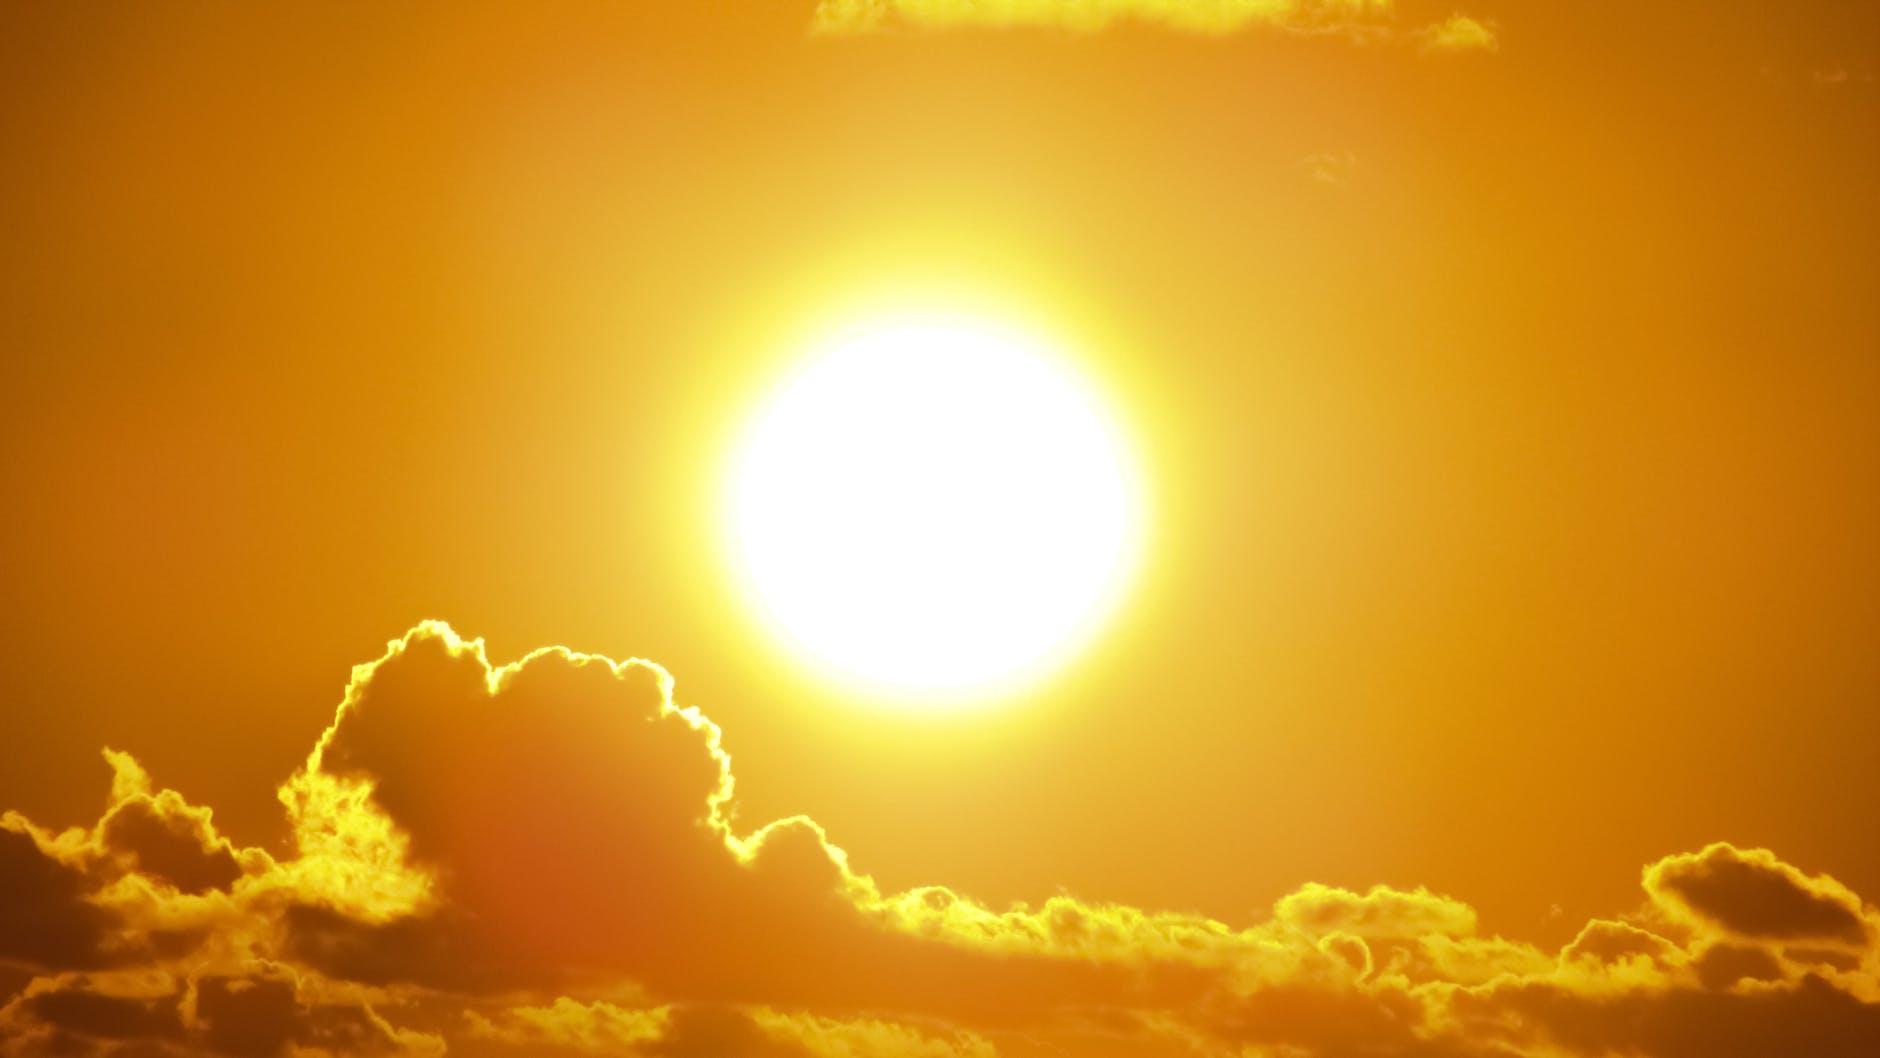 Sun, News - Vero index Mon degrees to values exceed 100 Heat